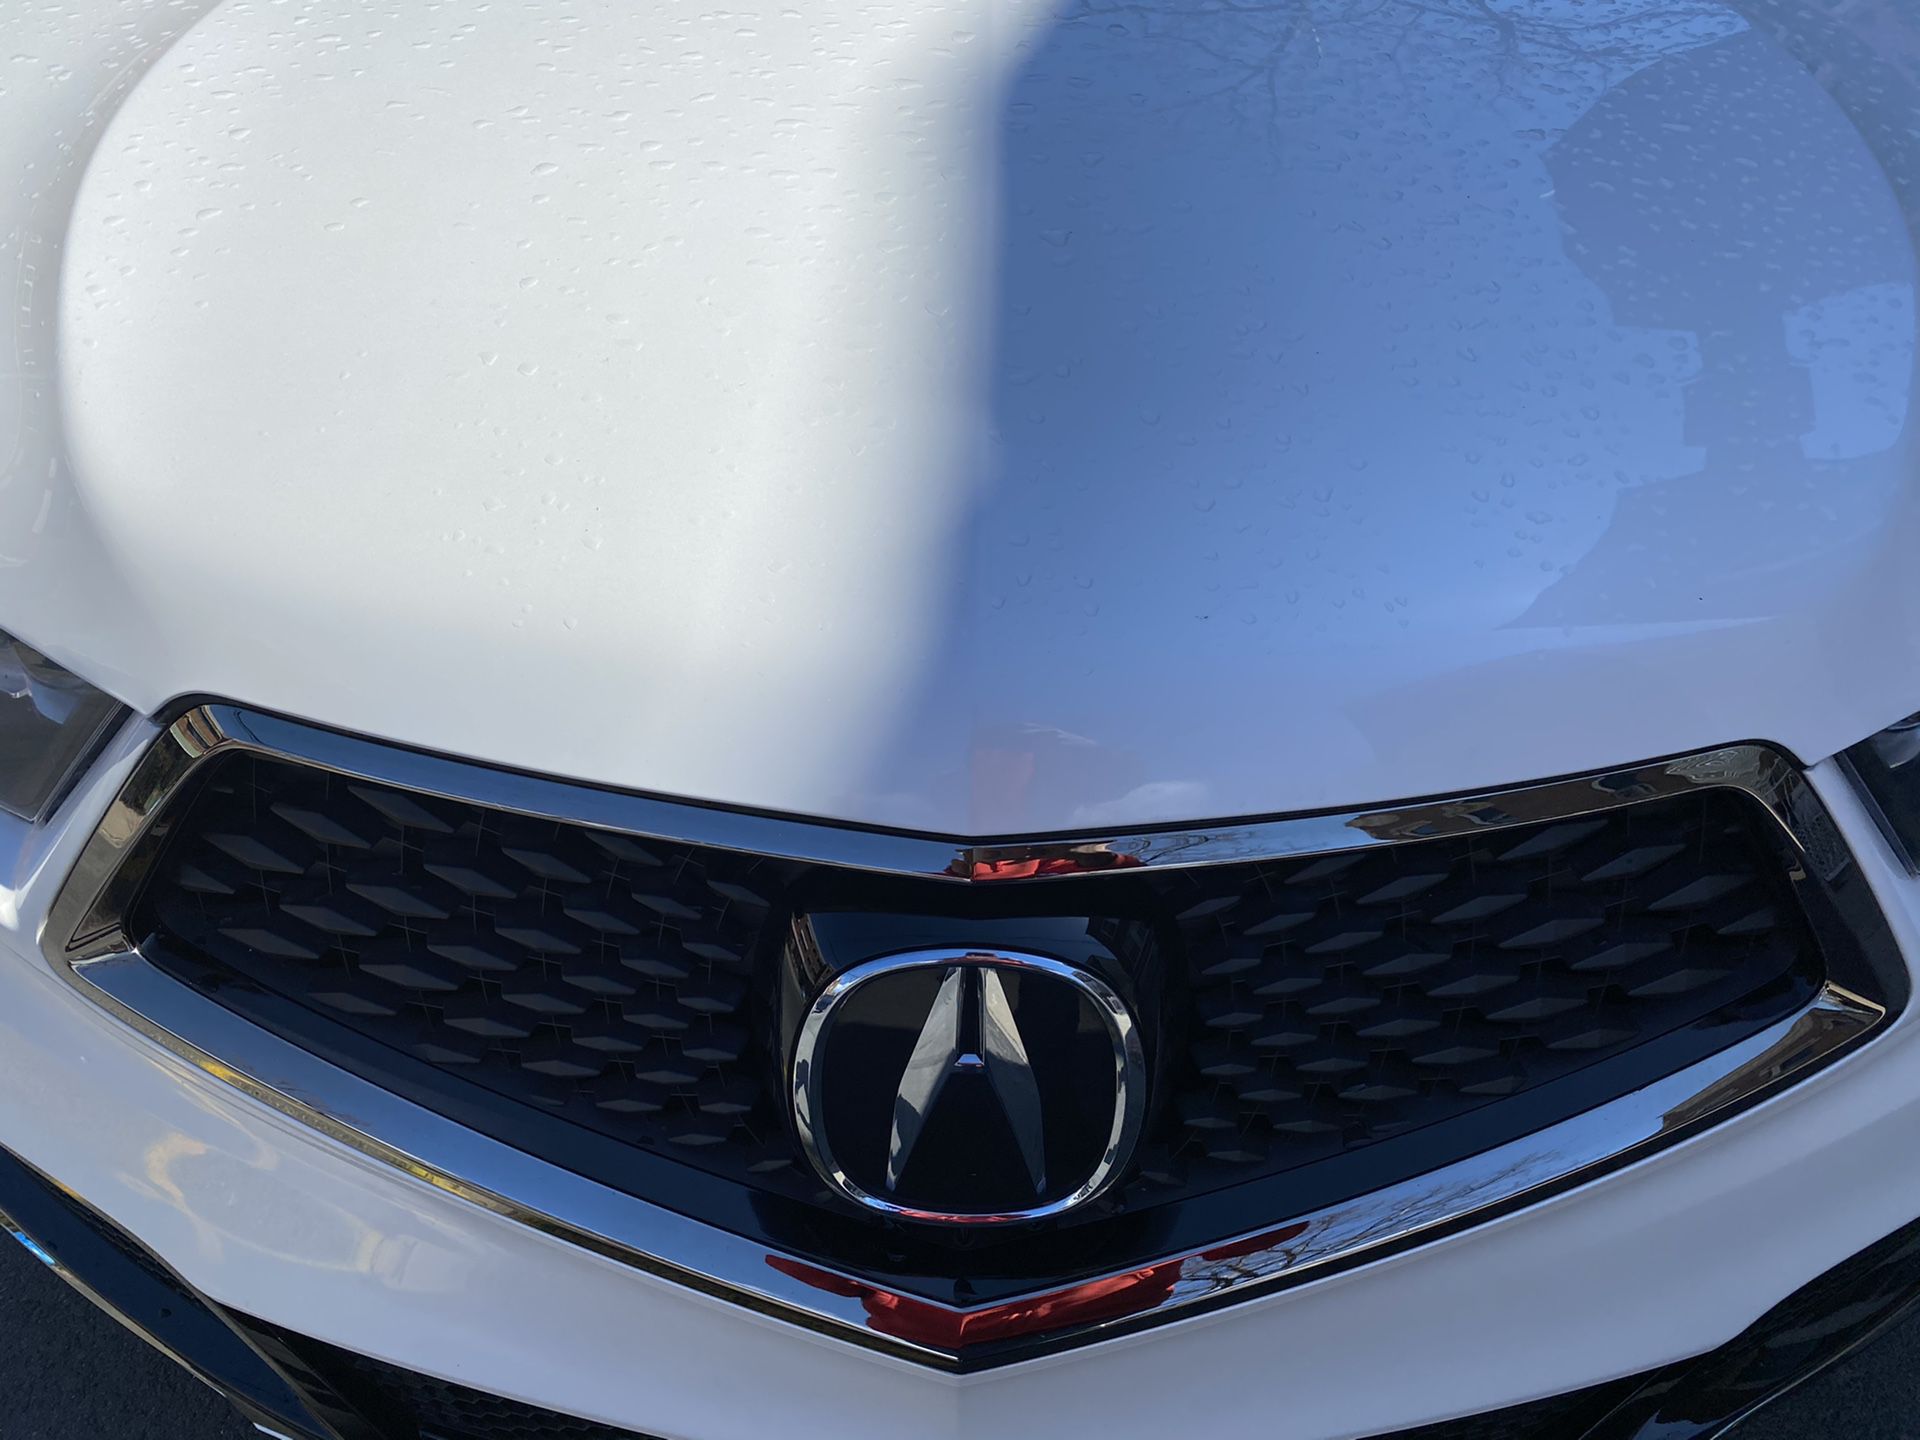 2019 Acura MDX aspec hood headlights